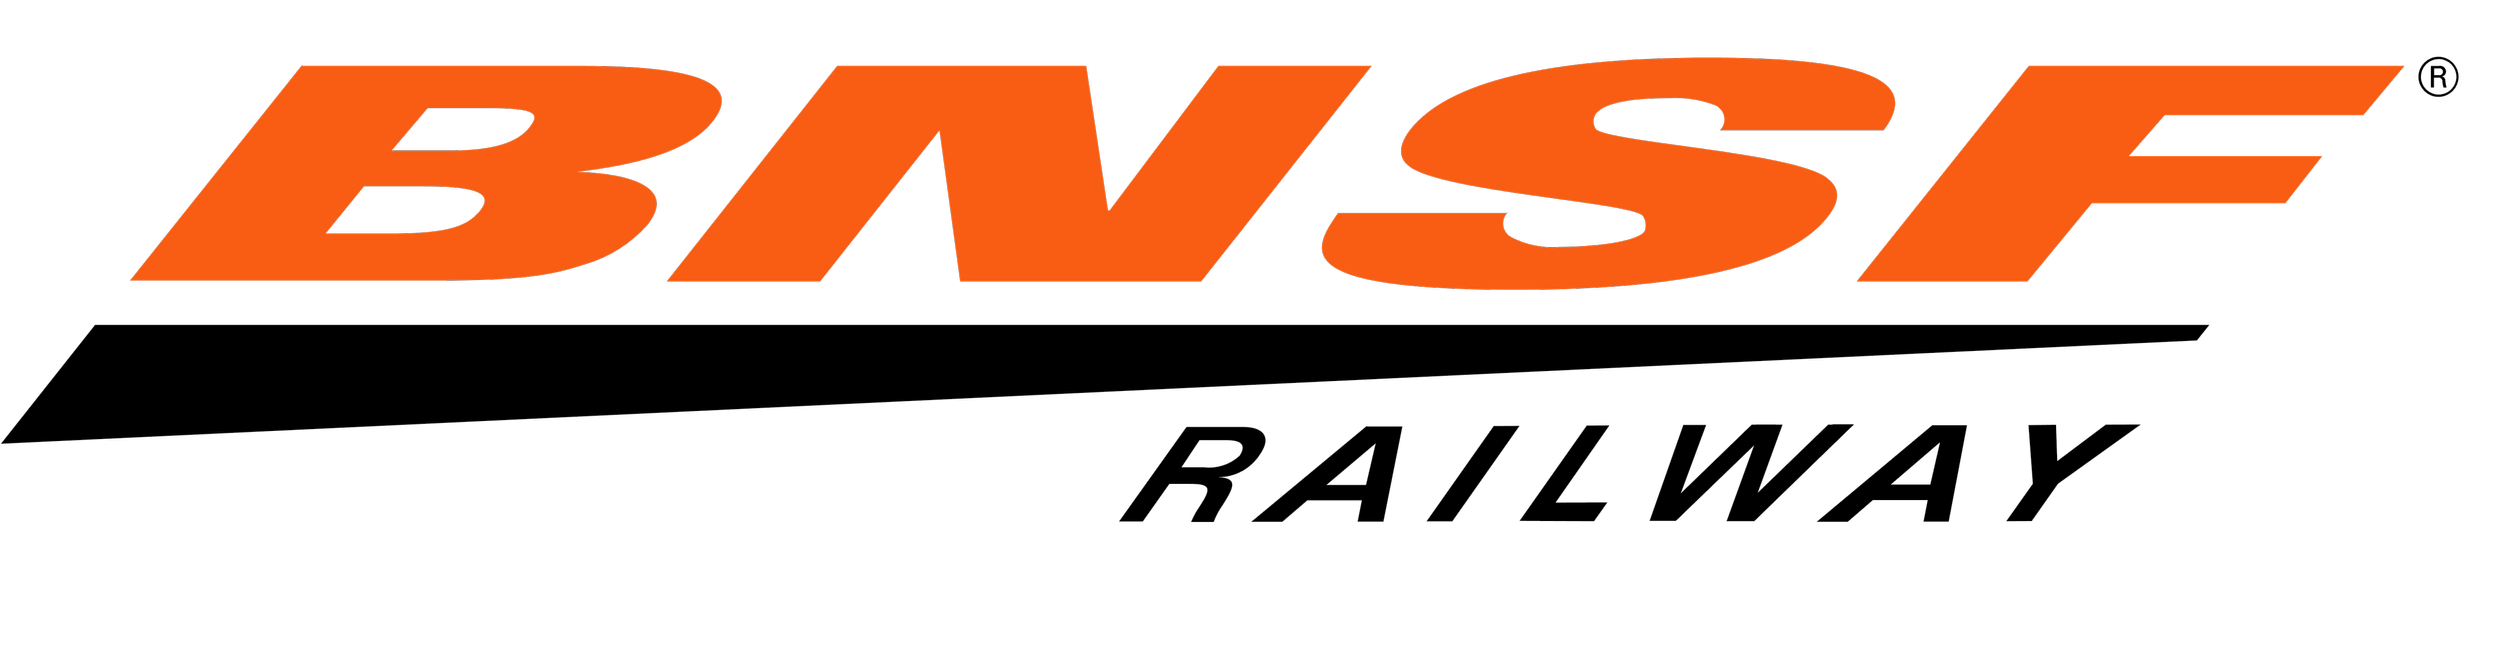 BNSF Logo.png